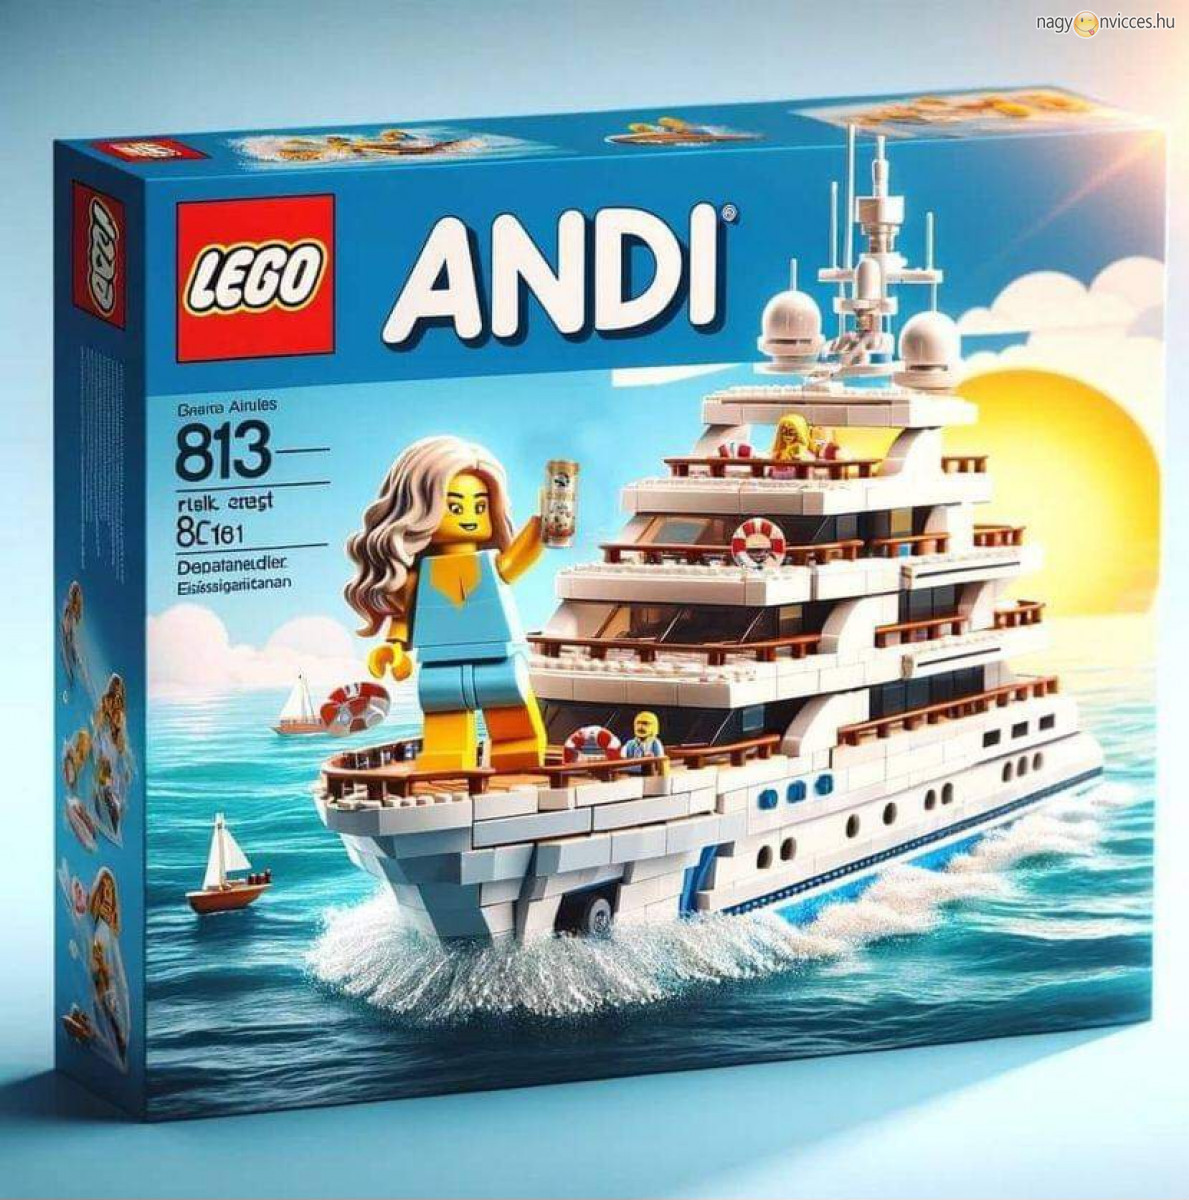 Galéria / Lego Andi